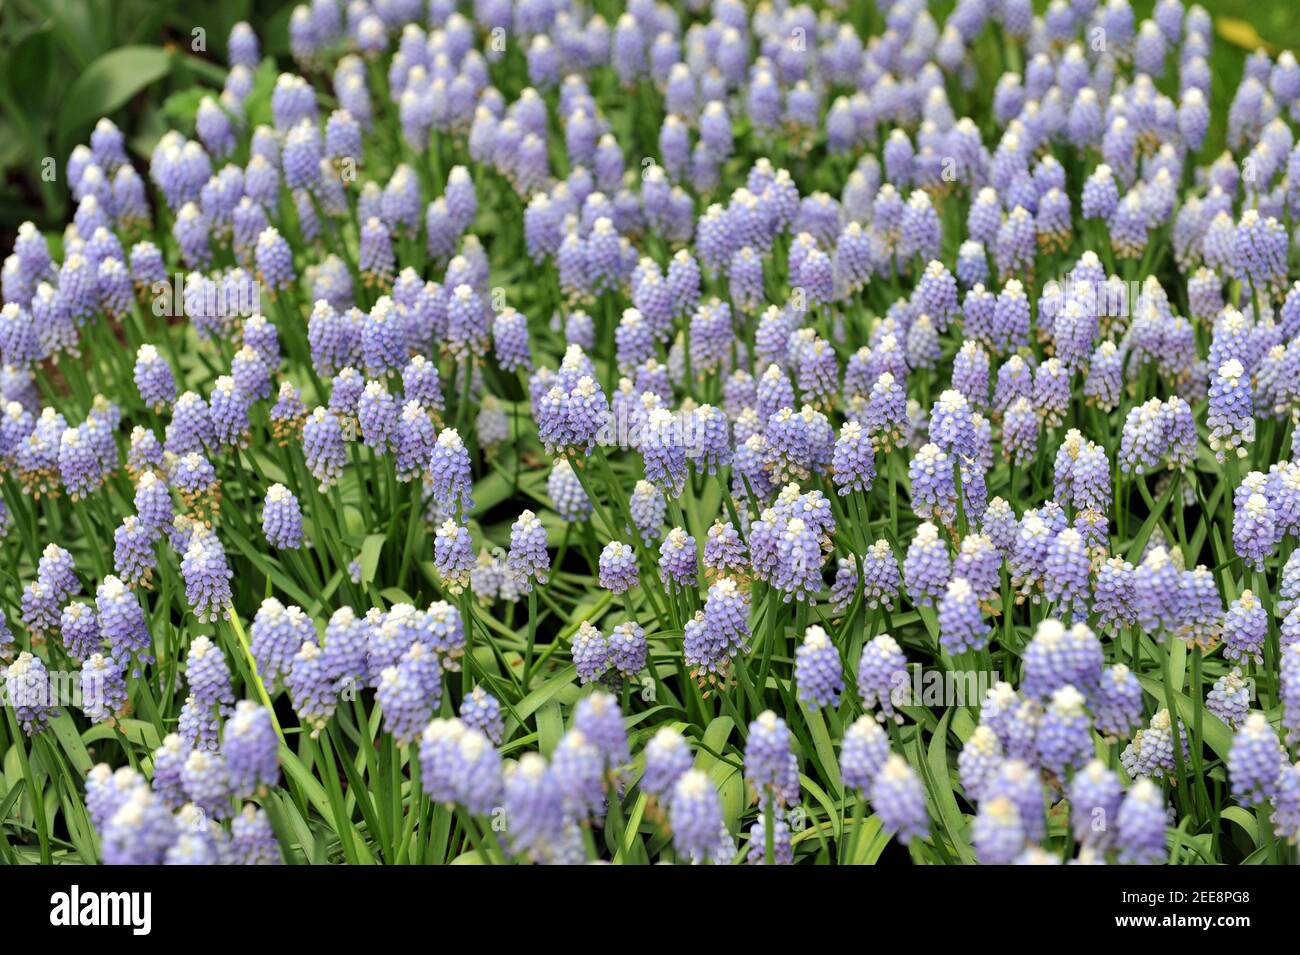 Aucher-Eloy grape hyacinth (Muscari aucheri) Ocean Magic blooms in a garden in April Stock Photo